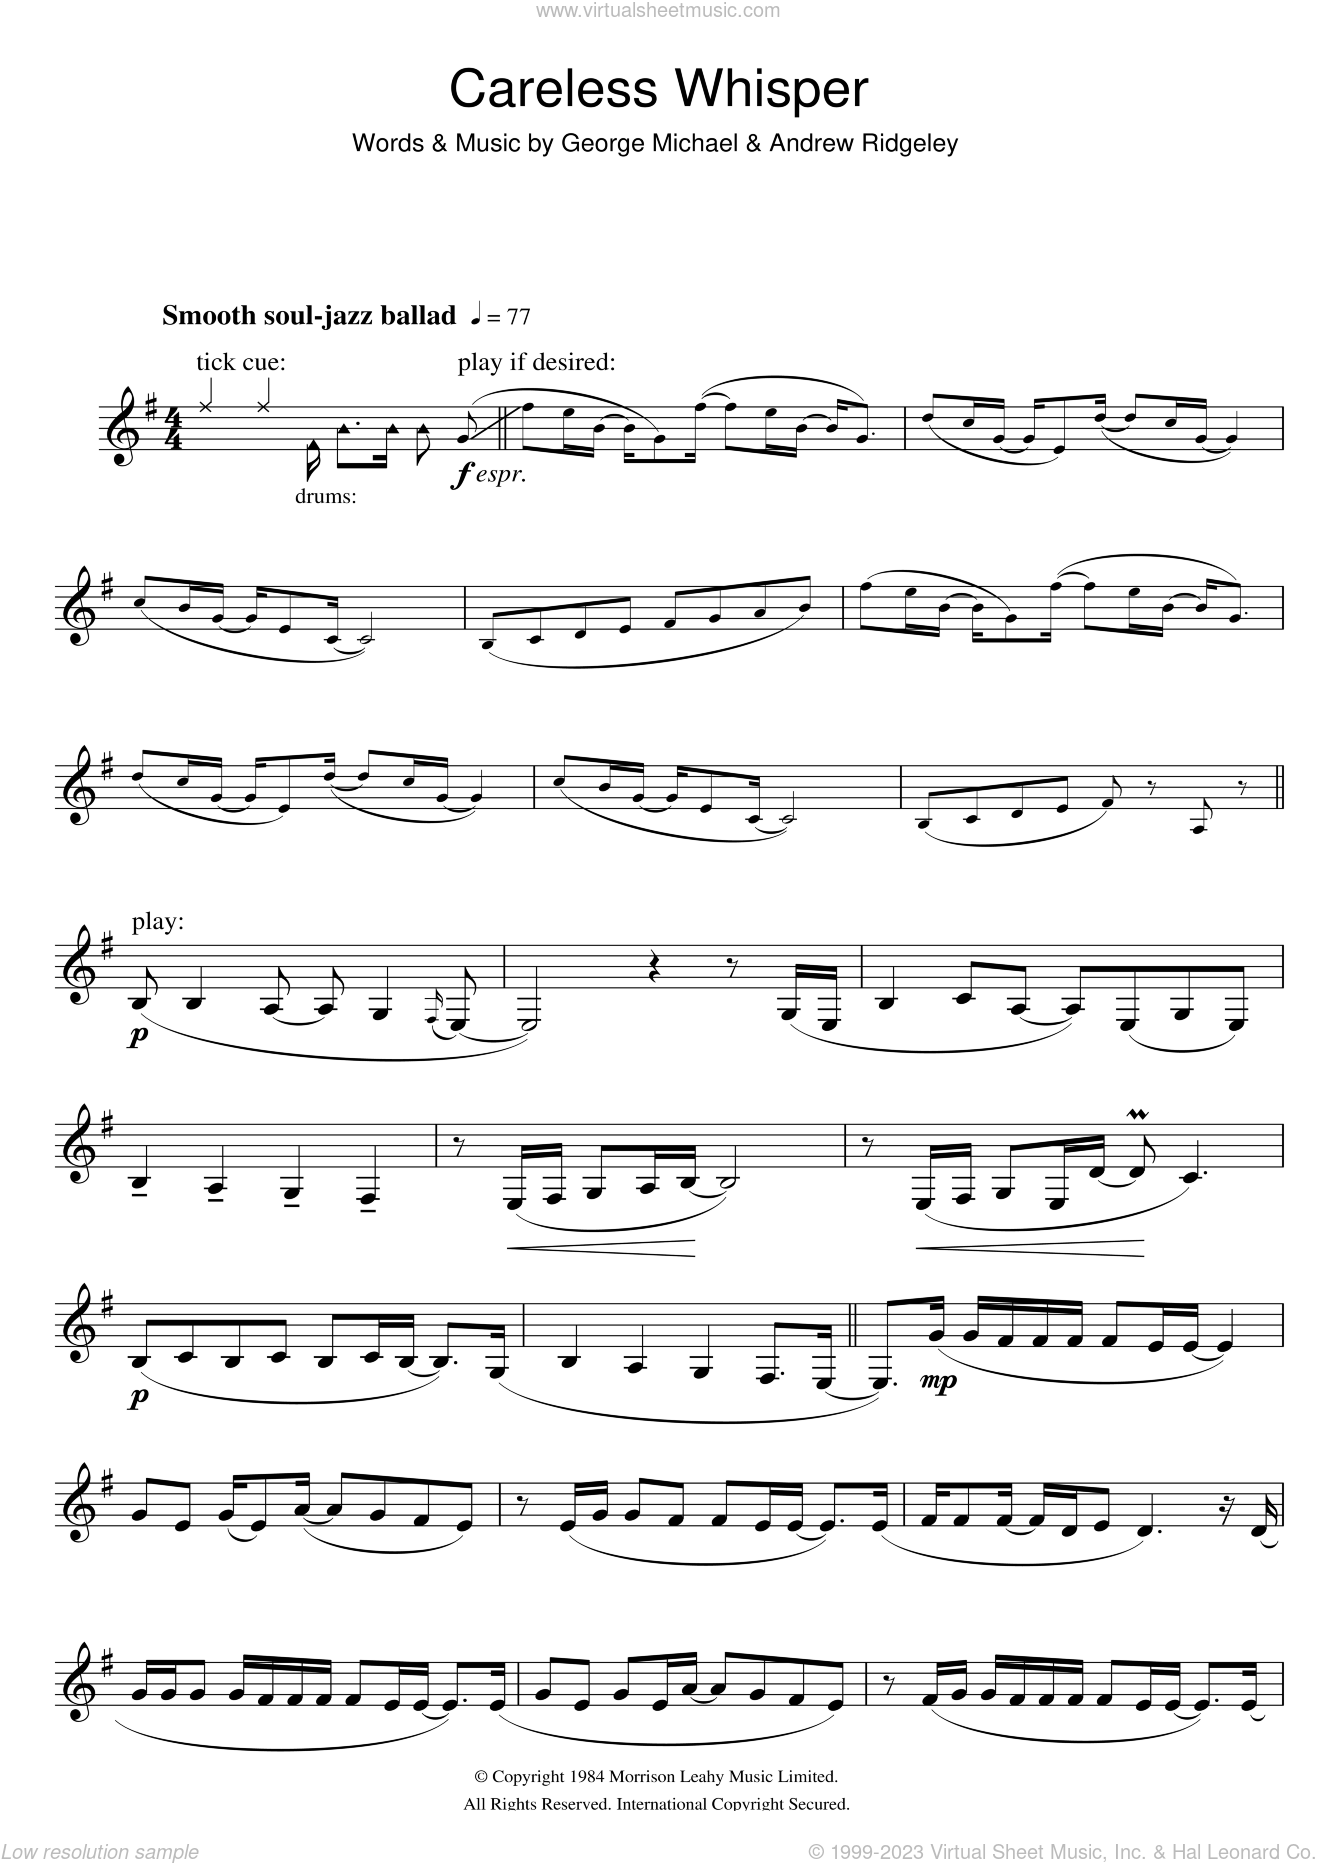 Shout It Out Loud: E-flat Alto Saxophone: E-flat Alto Saxophone Part -  Digital Sheet Music Download